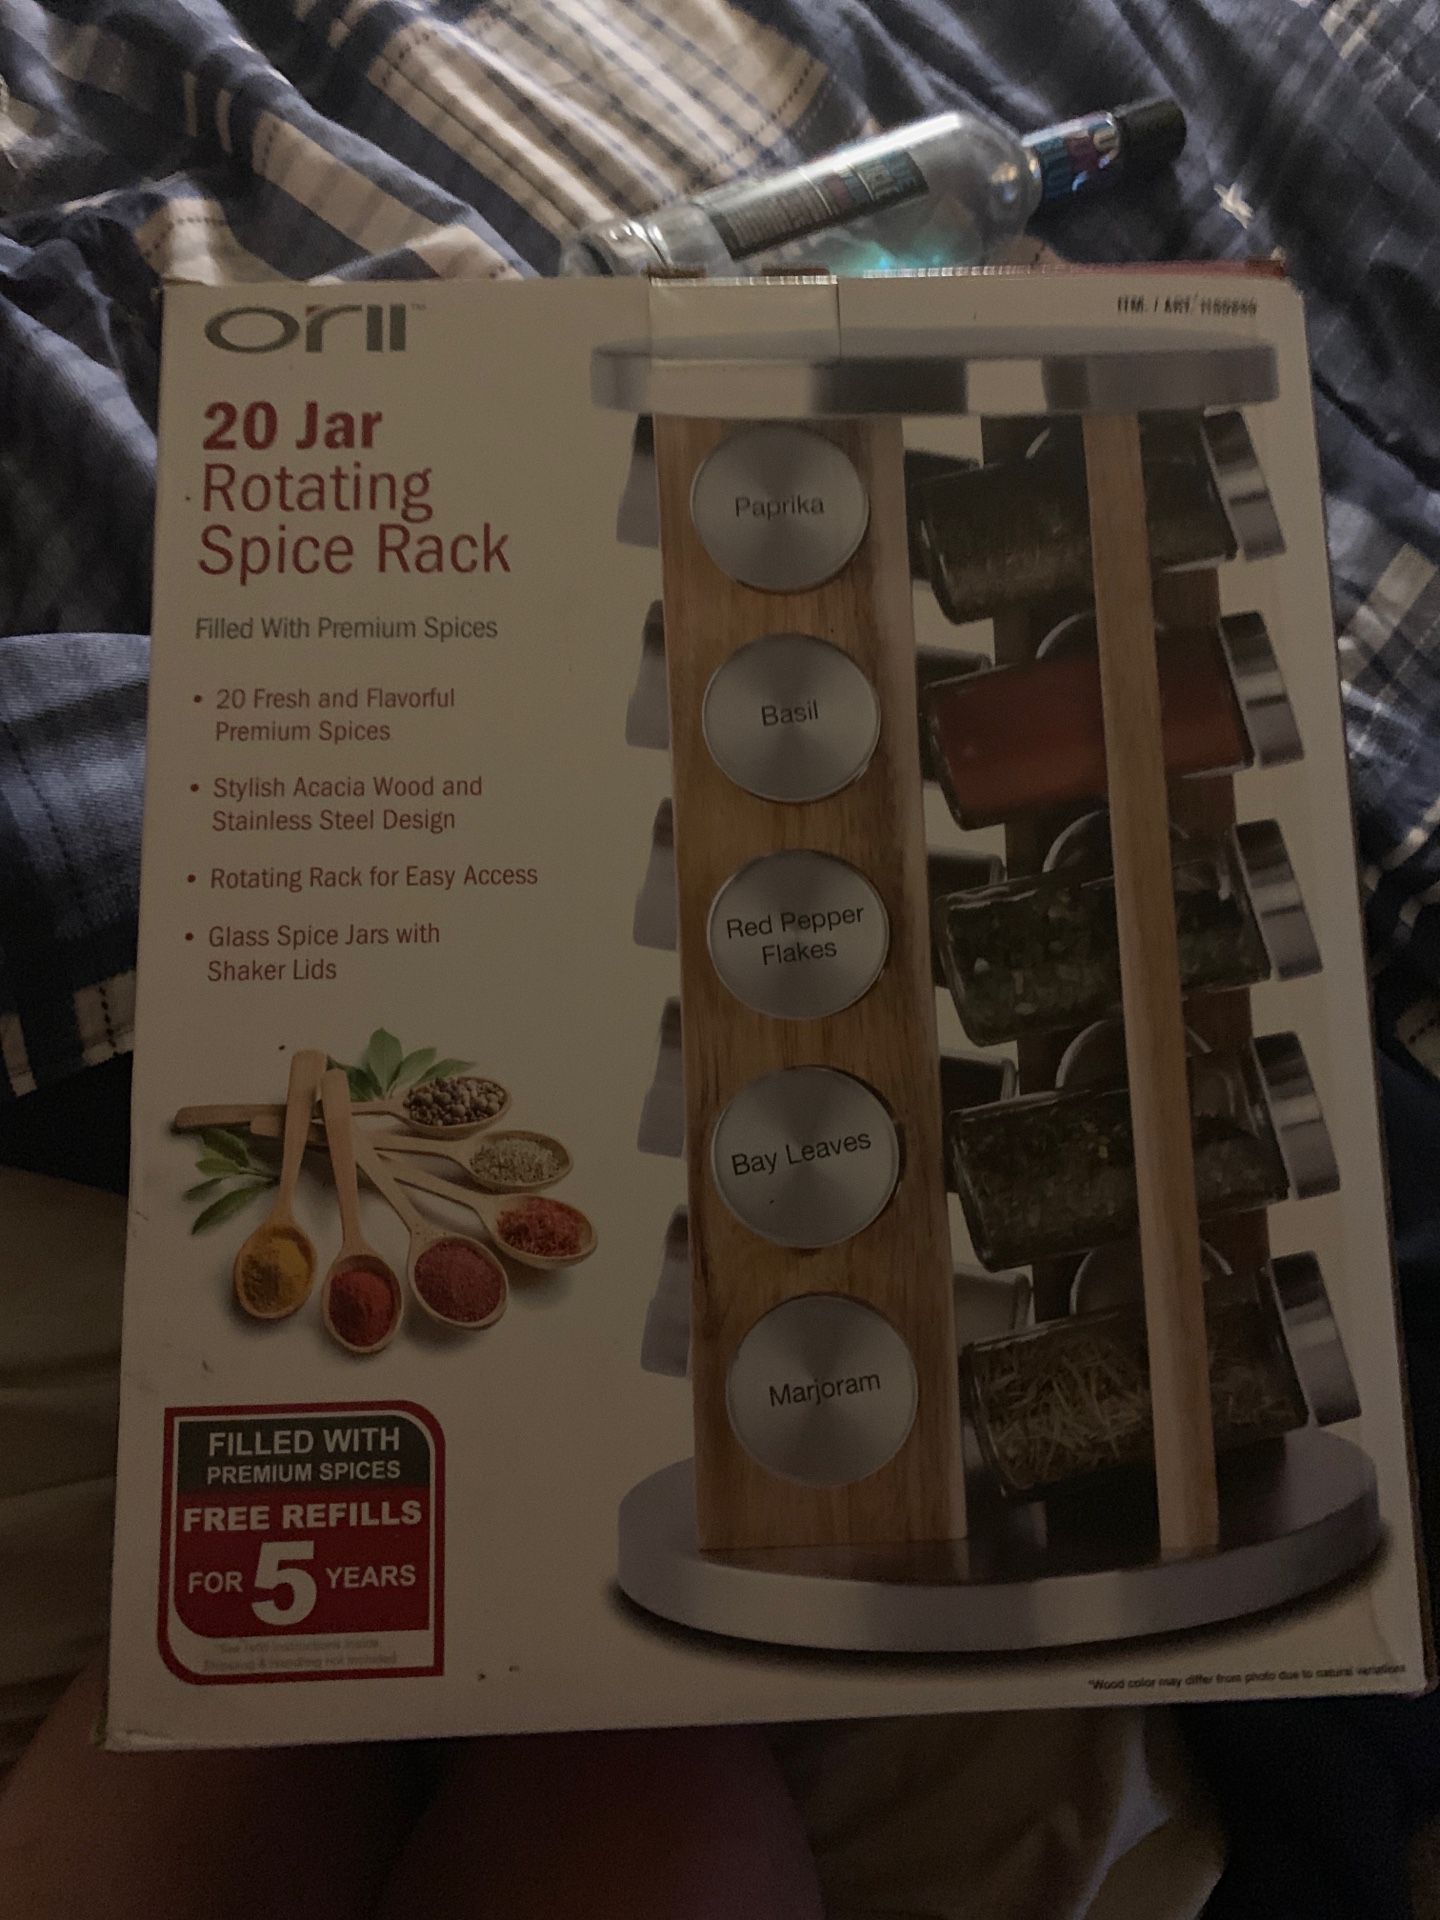 Brand new ORll 20 Jar Rotating Spice Rack